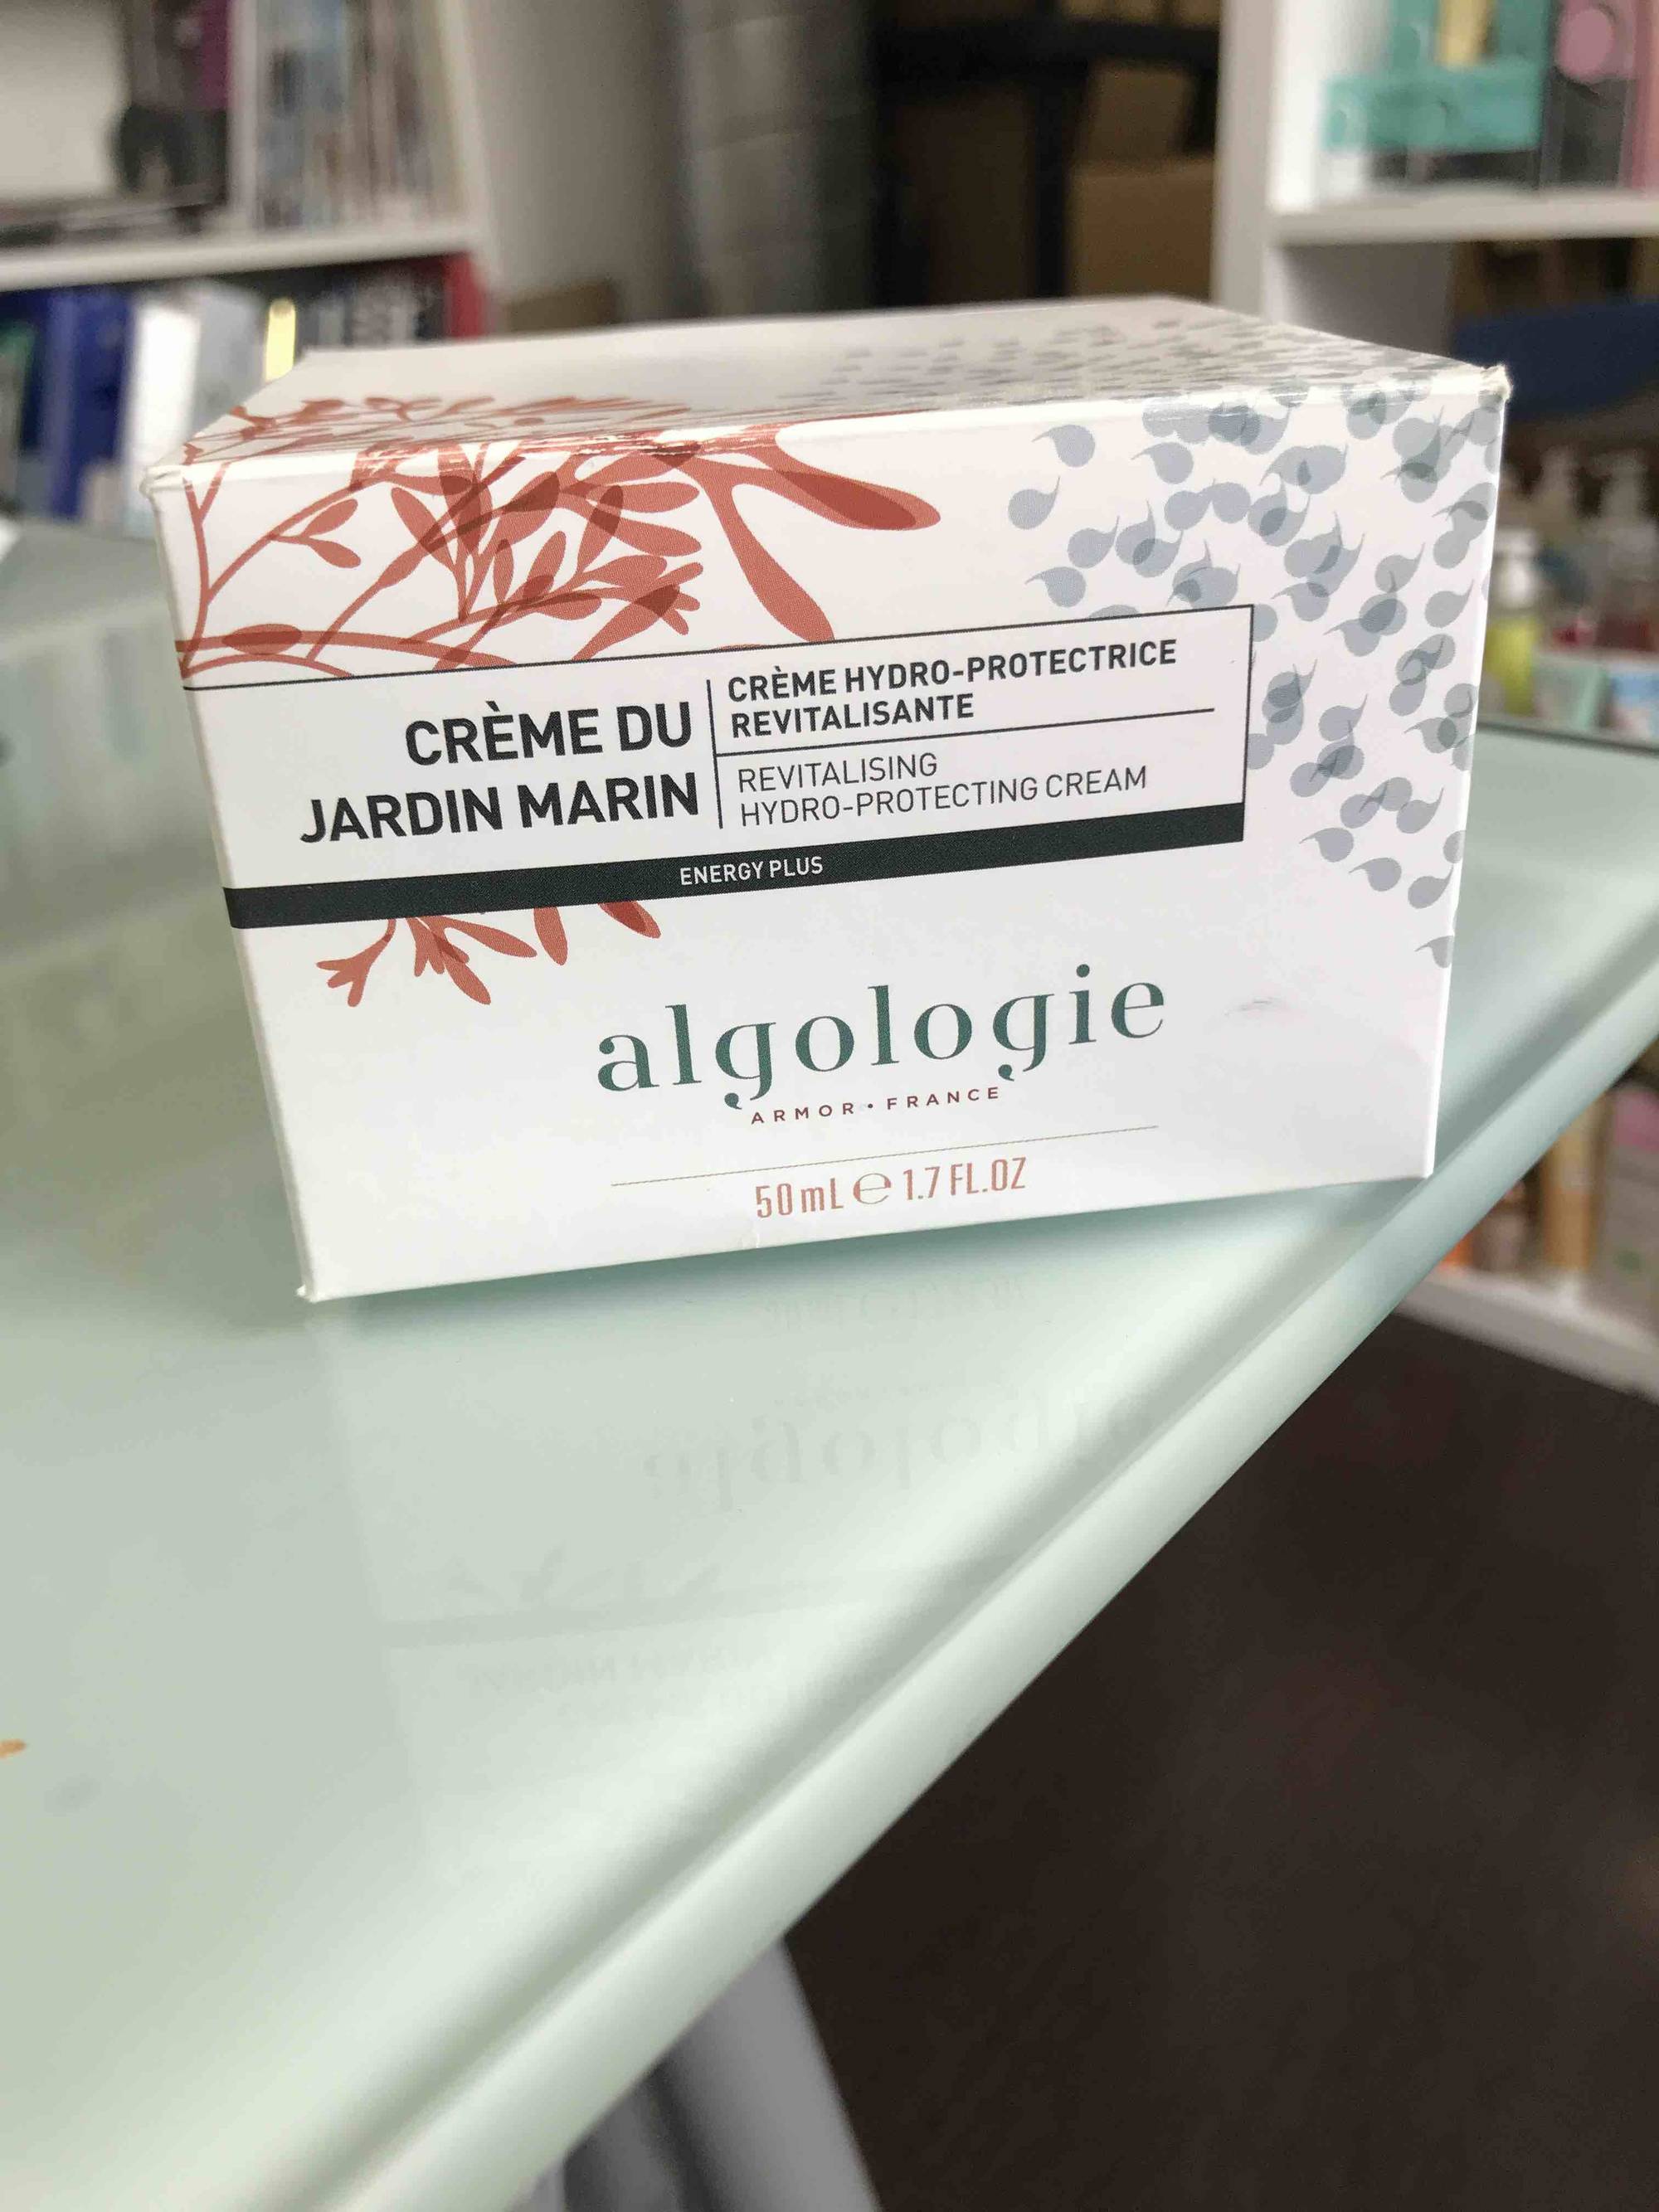 ALGOLOGIE - Crème du jardin marin - Crème hydro-protectrice revitalisante